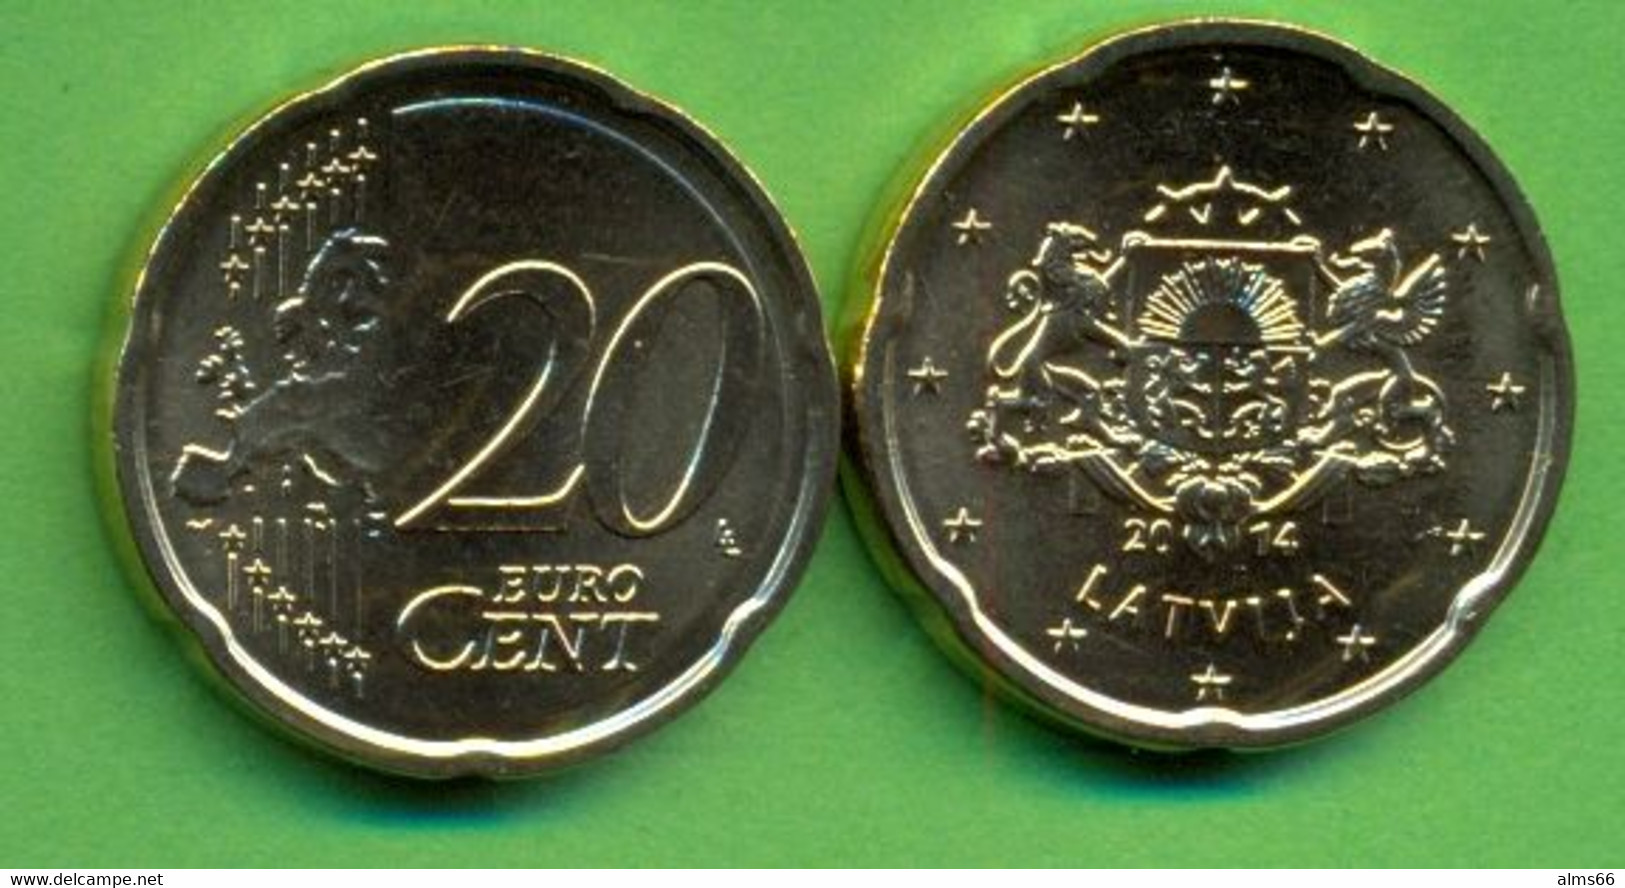 EuroCoins < Latvia > 20 Cents 2014 UNC - Latvia